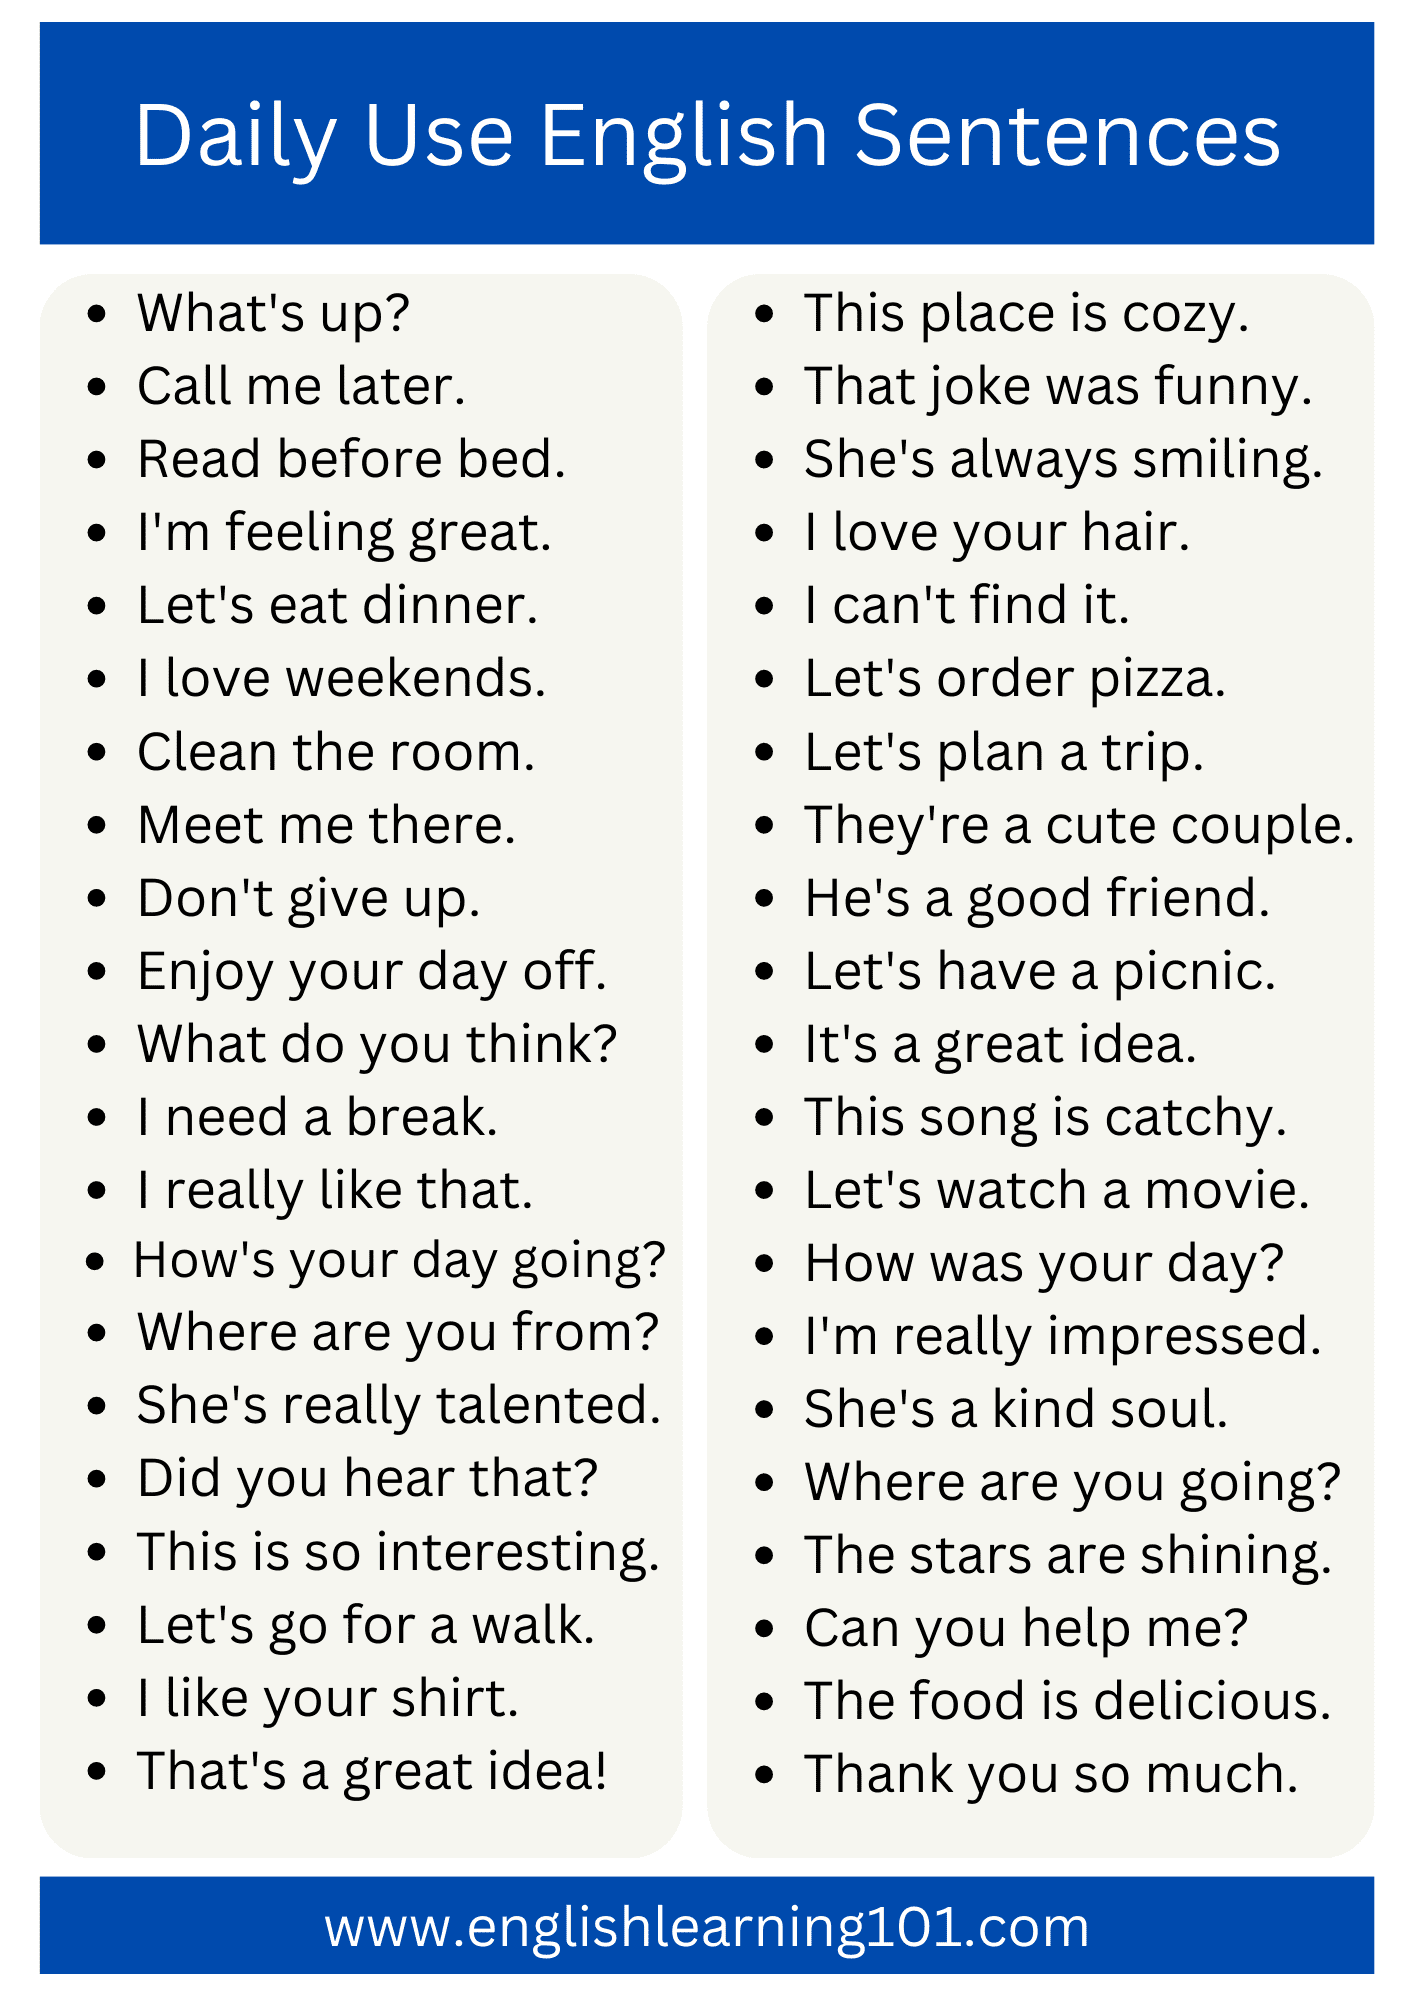 Daily use English sentences